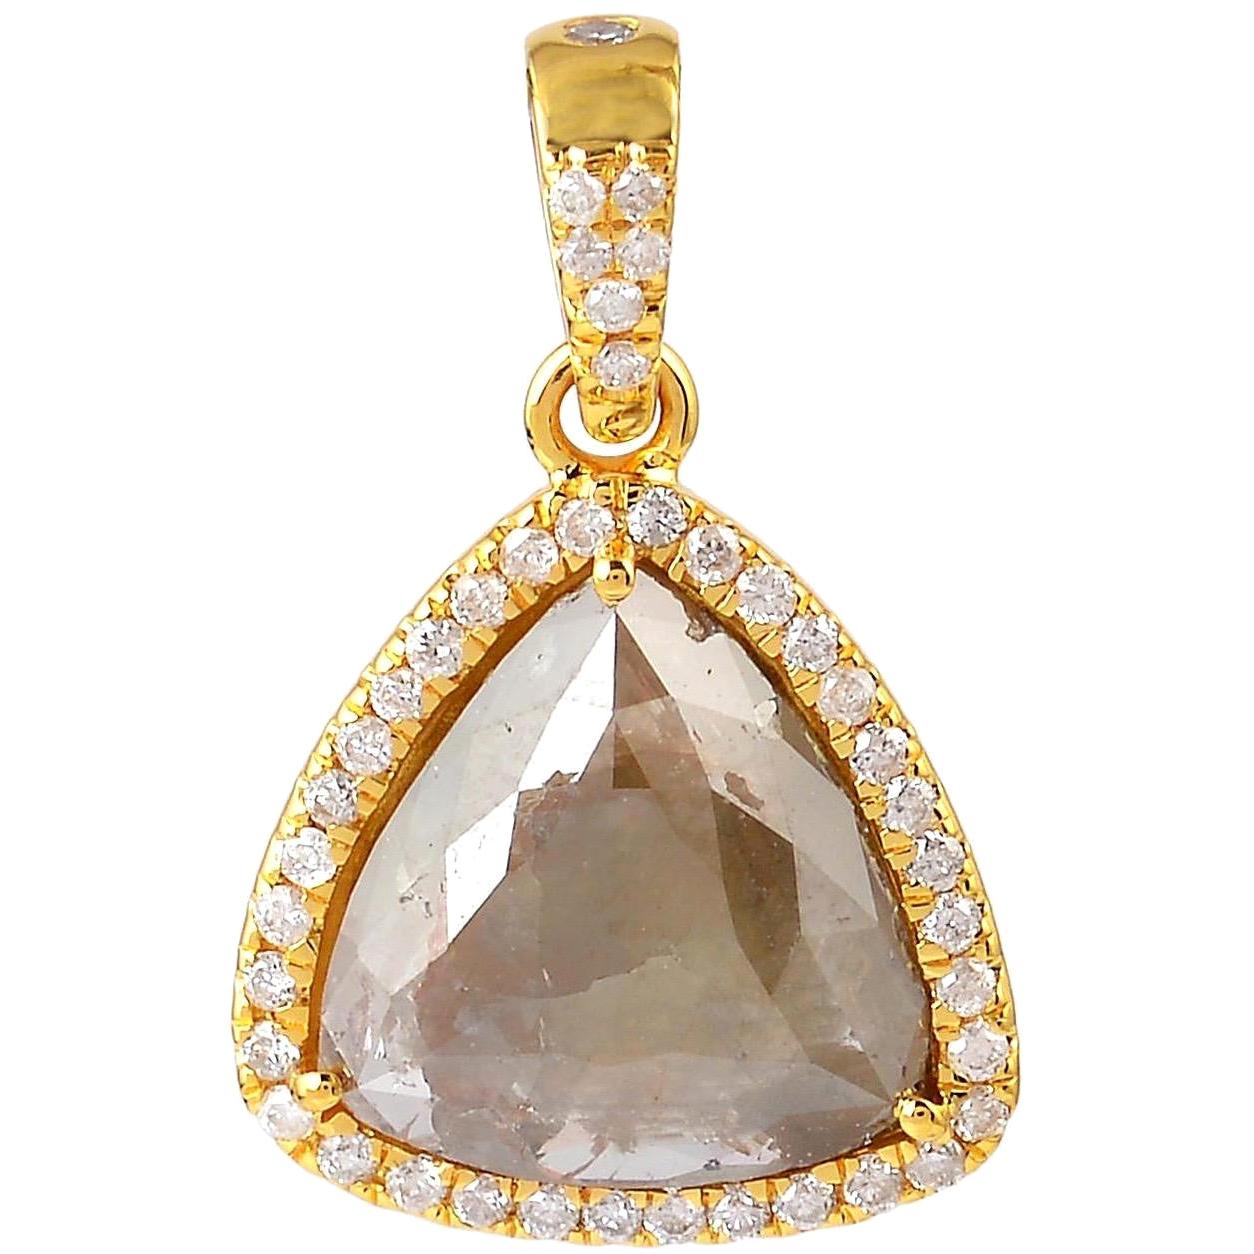 Collier pendentif en or 18 carats avec diamants en forme de tranche fantaisie